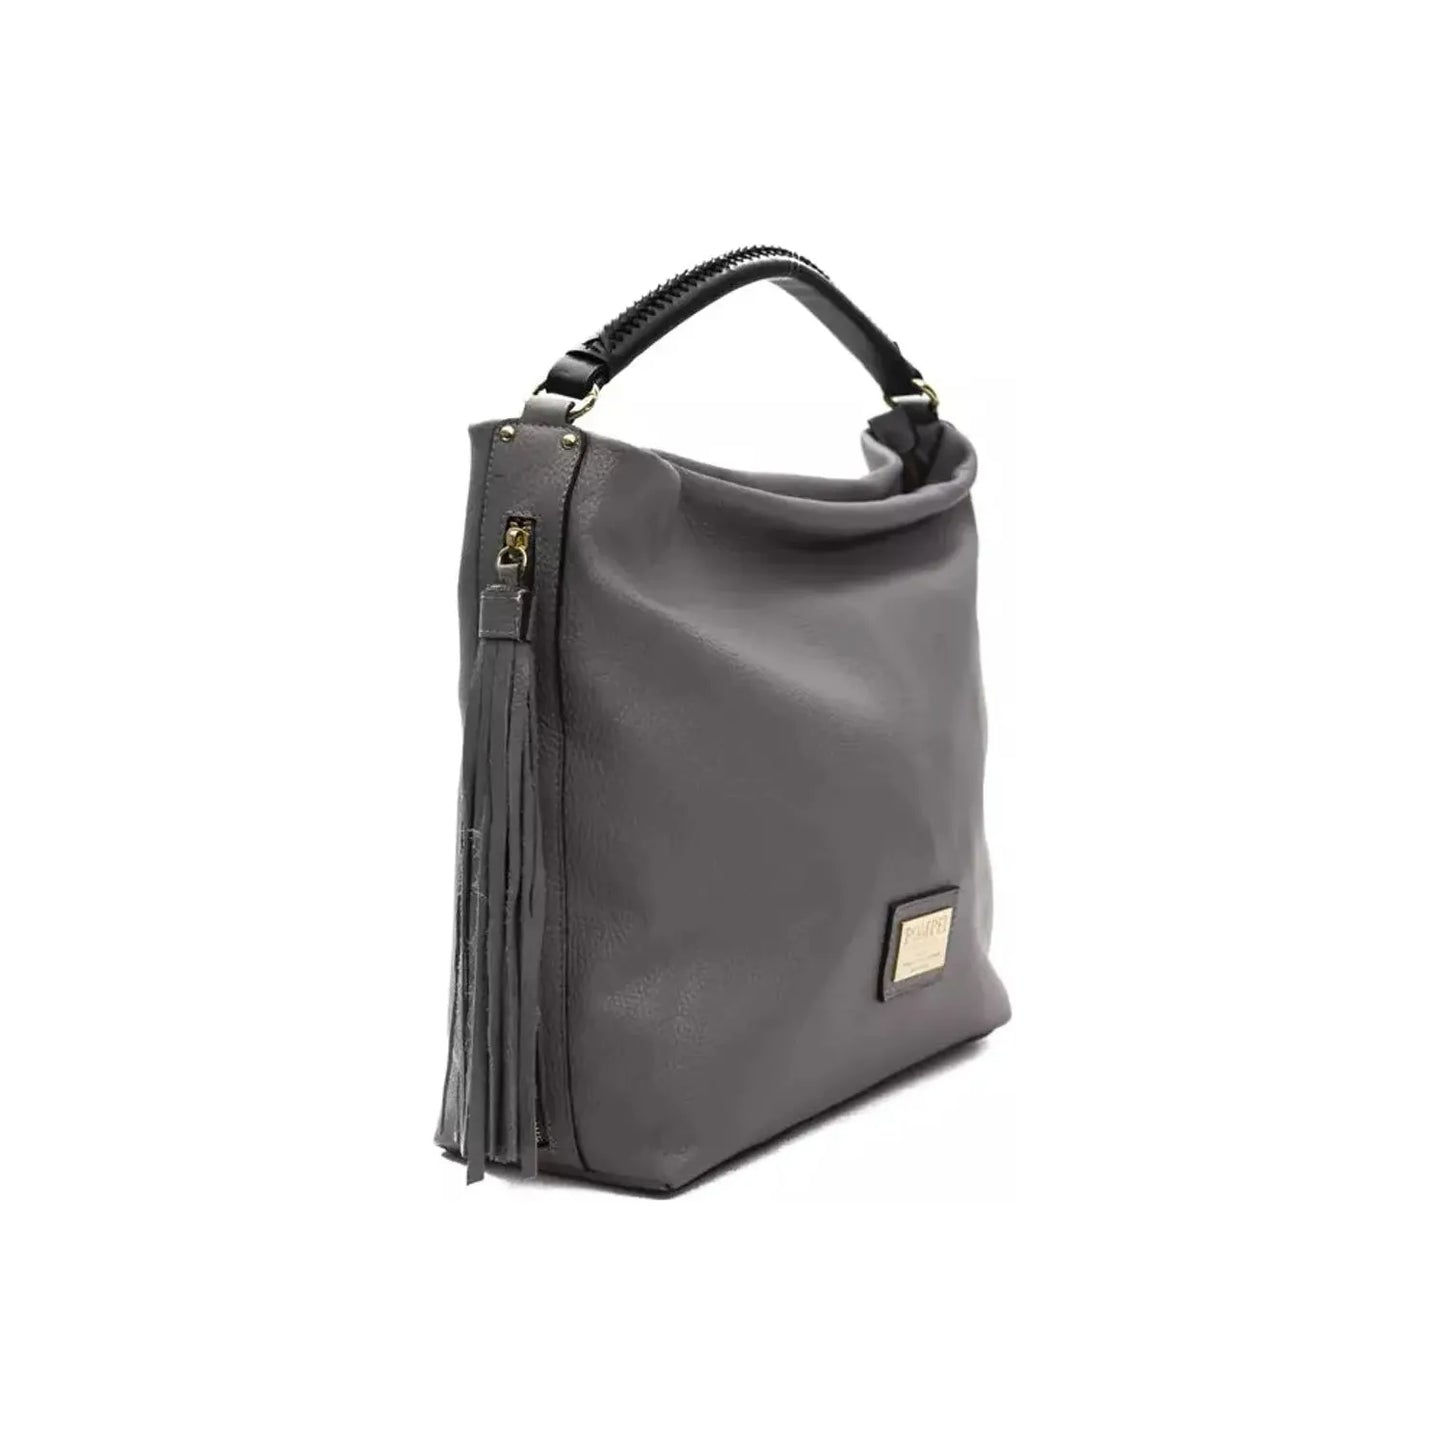 Pompei Donatella Chic Gray Leather Shoulder Bag WOMAN SHOULDER BAGS gray-leather-shoulder-bag-2